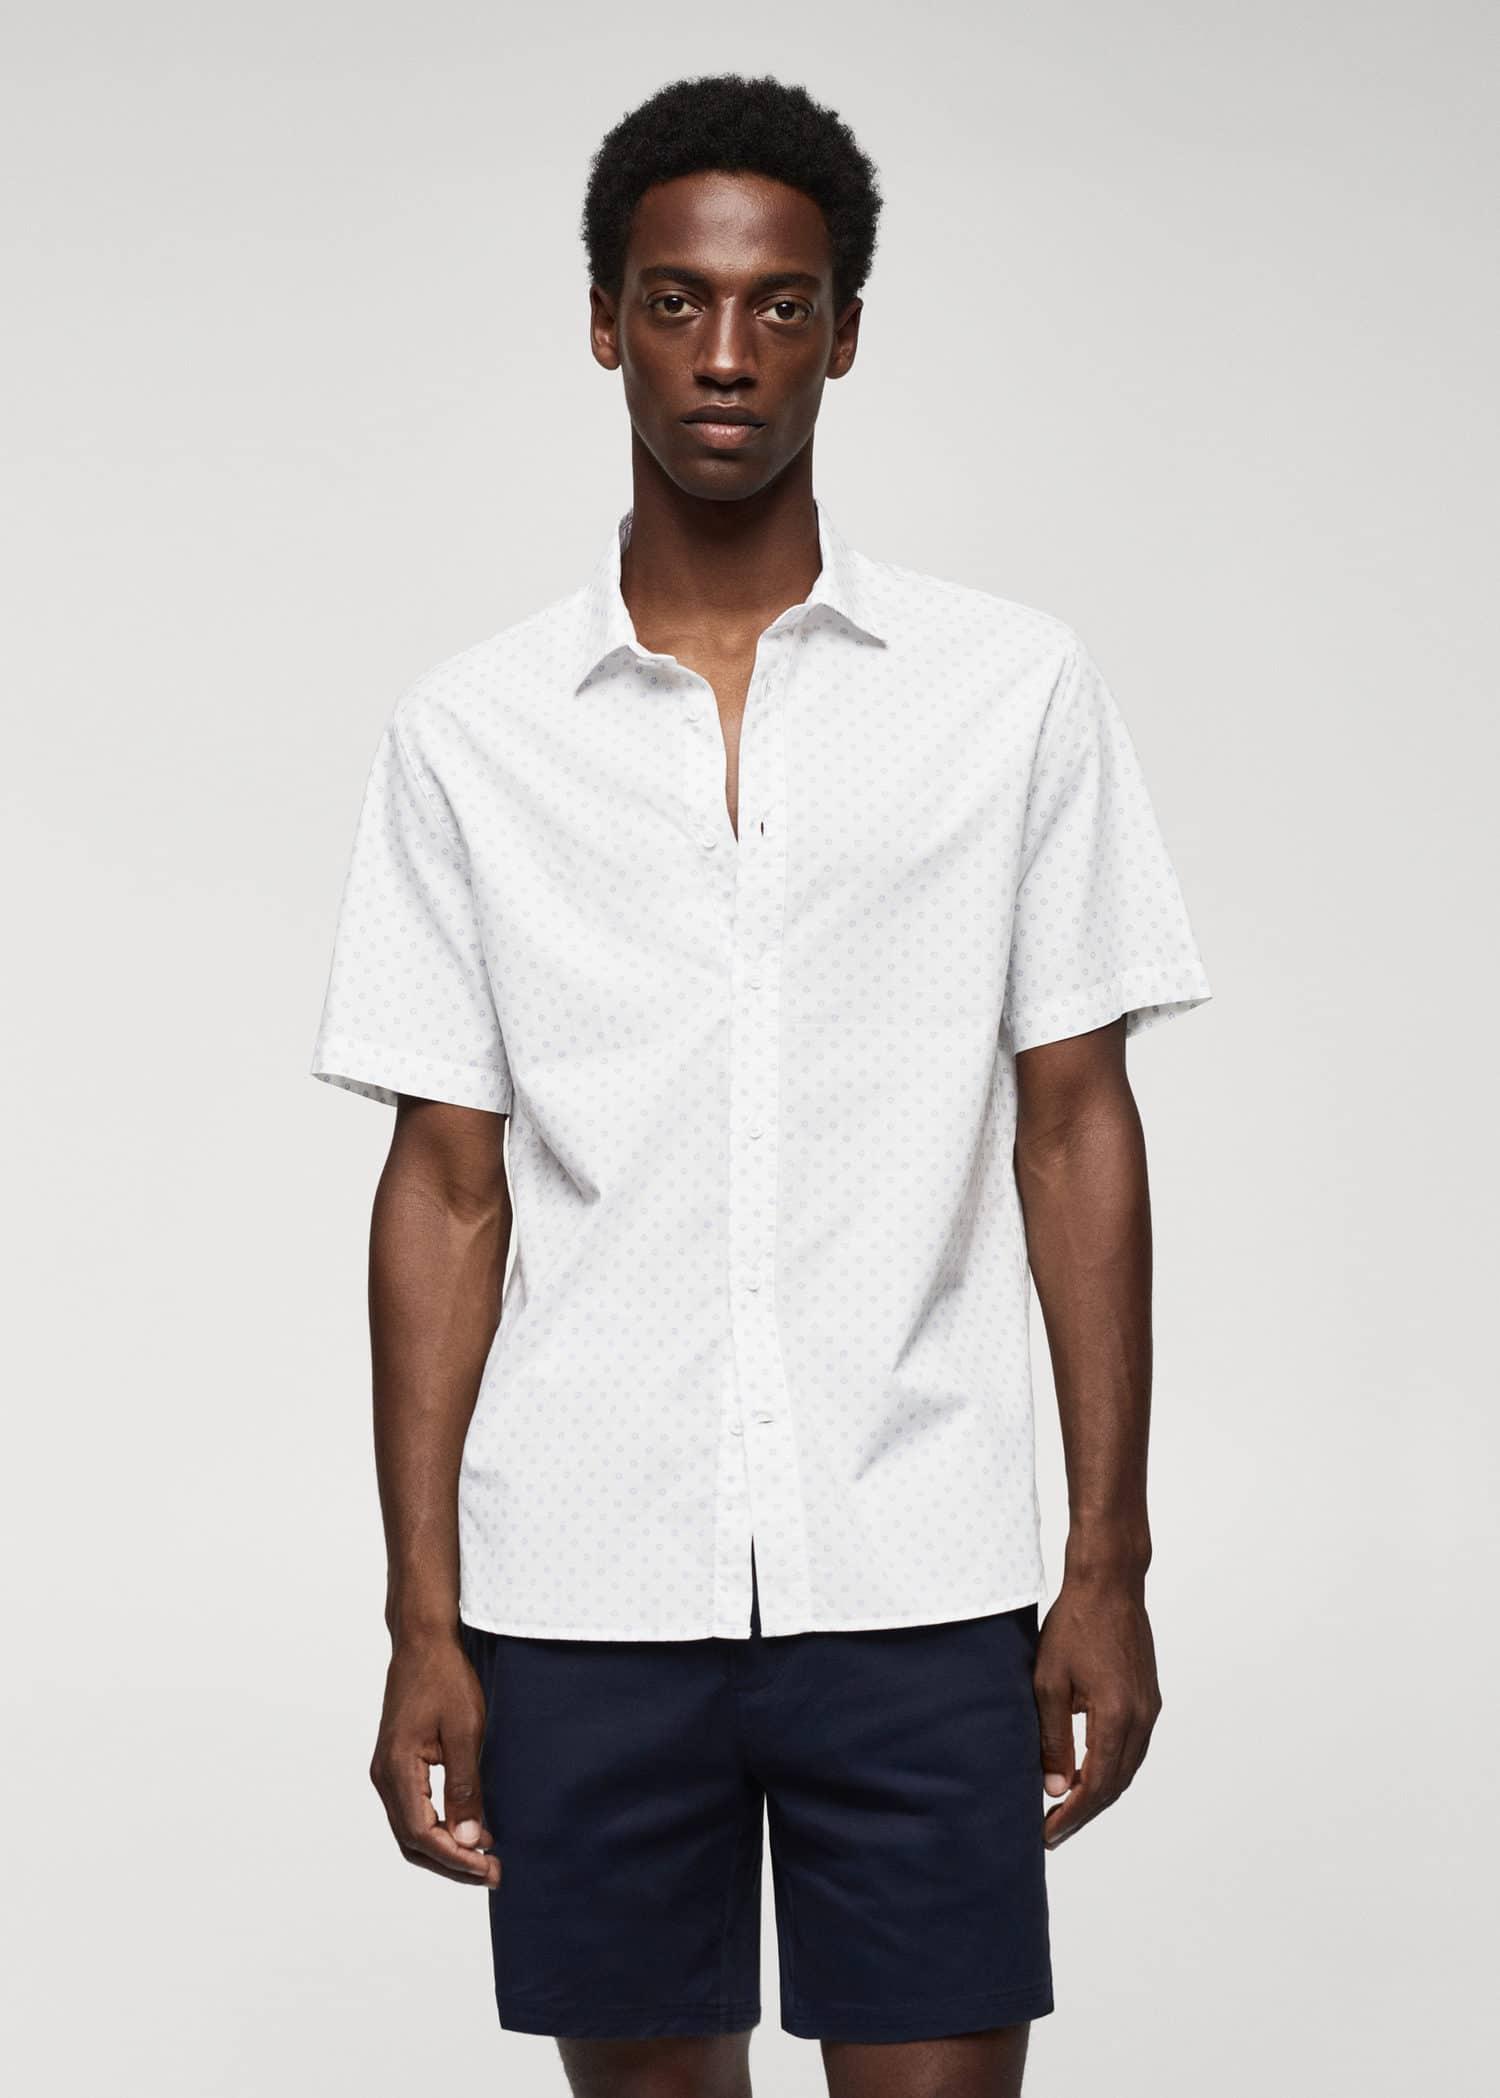 100% cotton short sleeve floral shirt